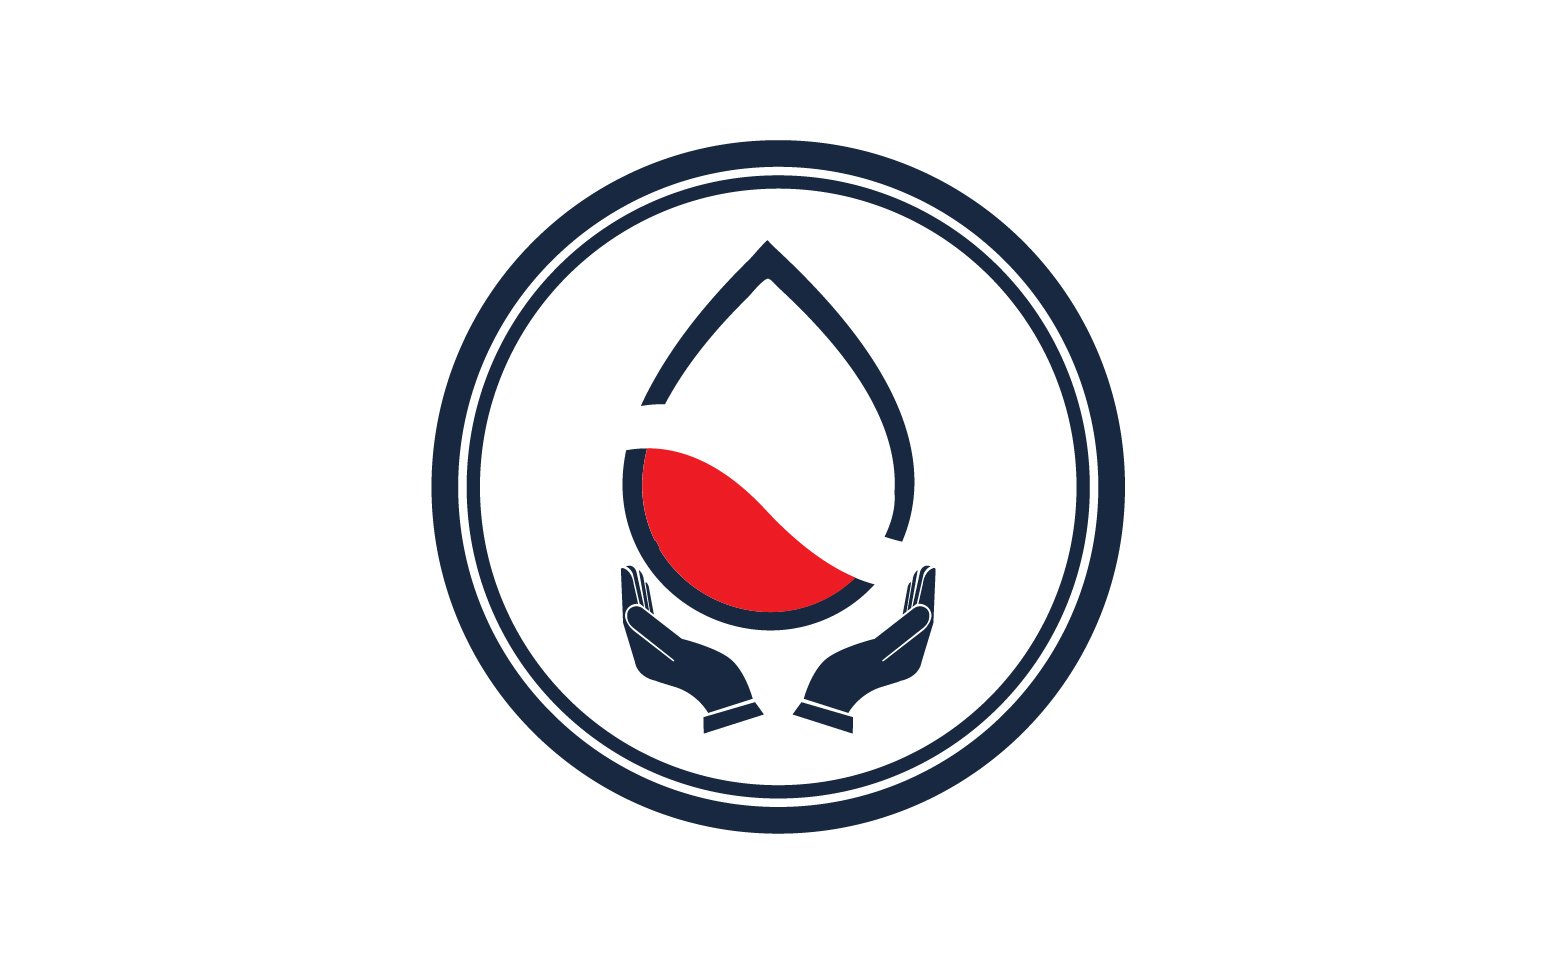 Blood drop icon logo template version v53